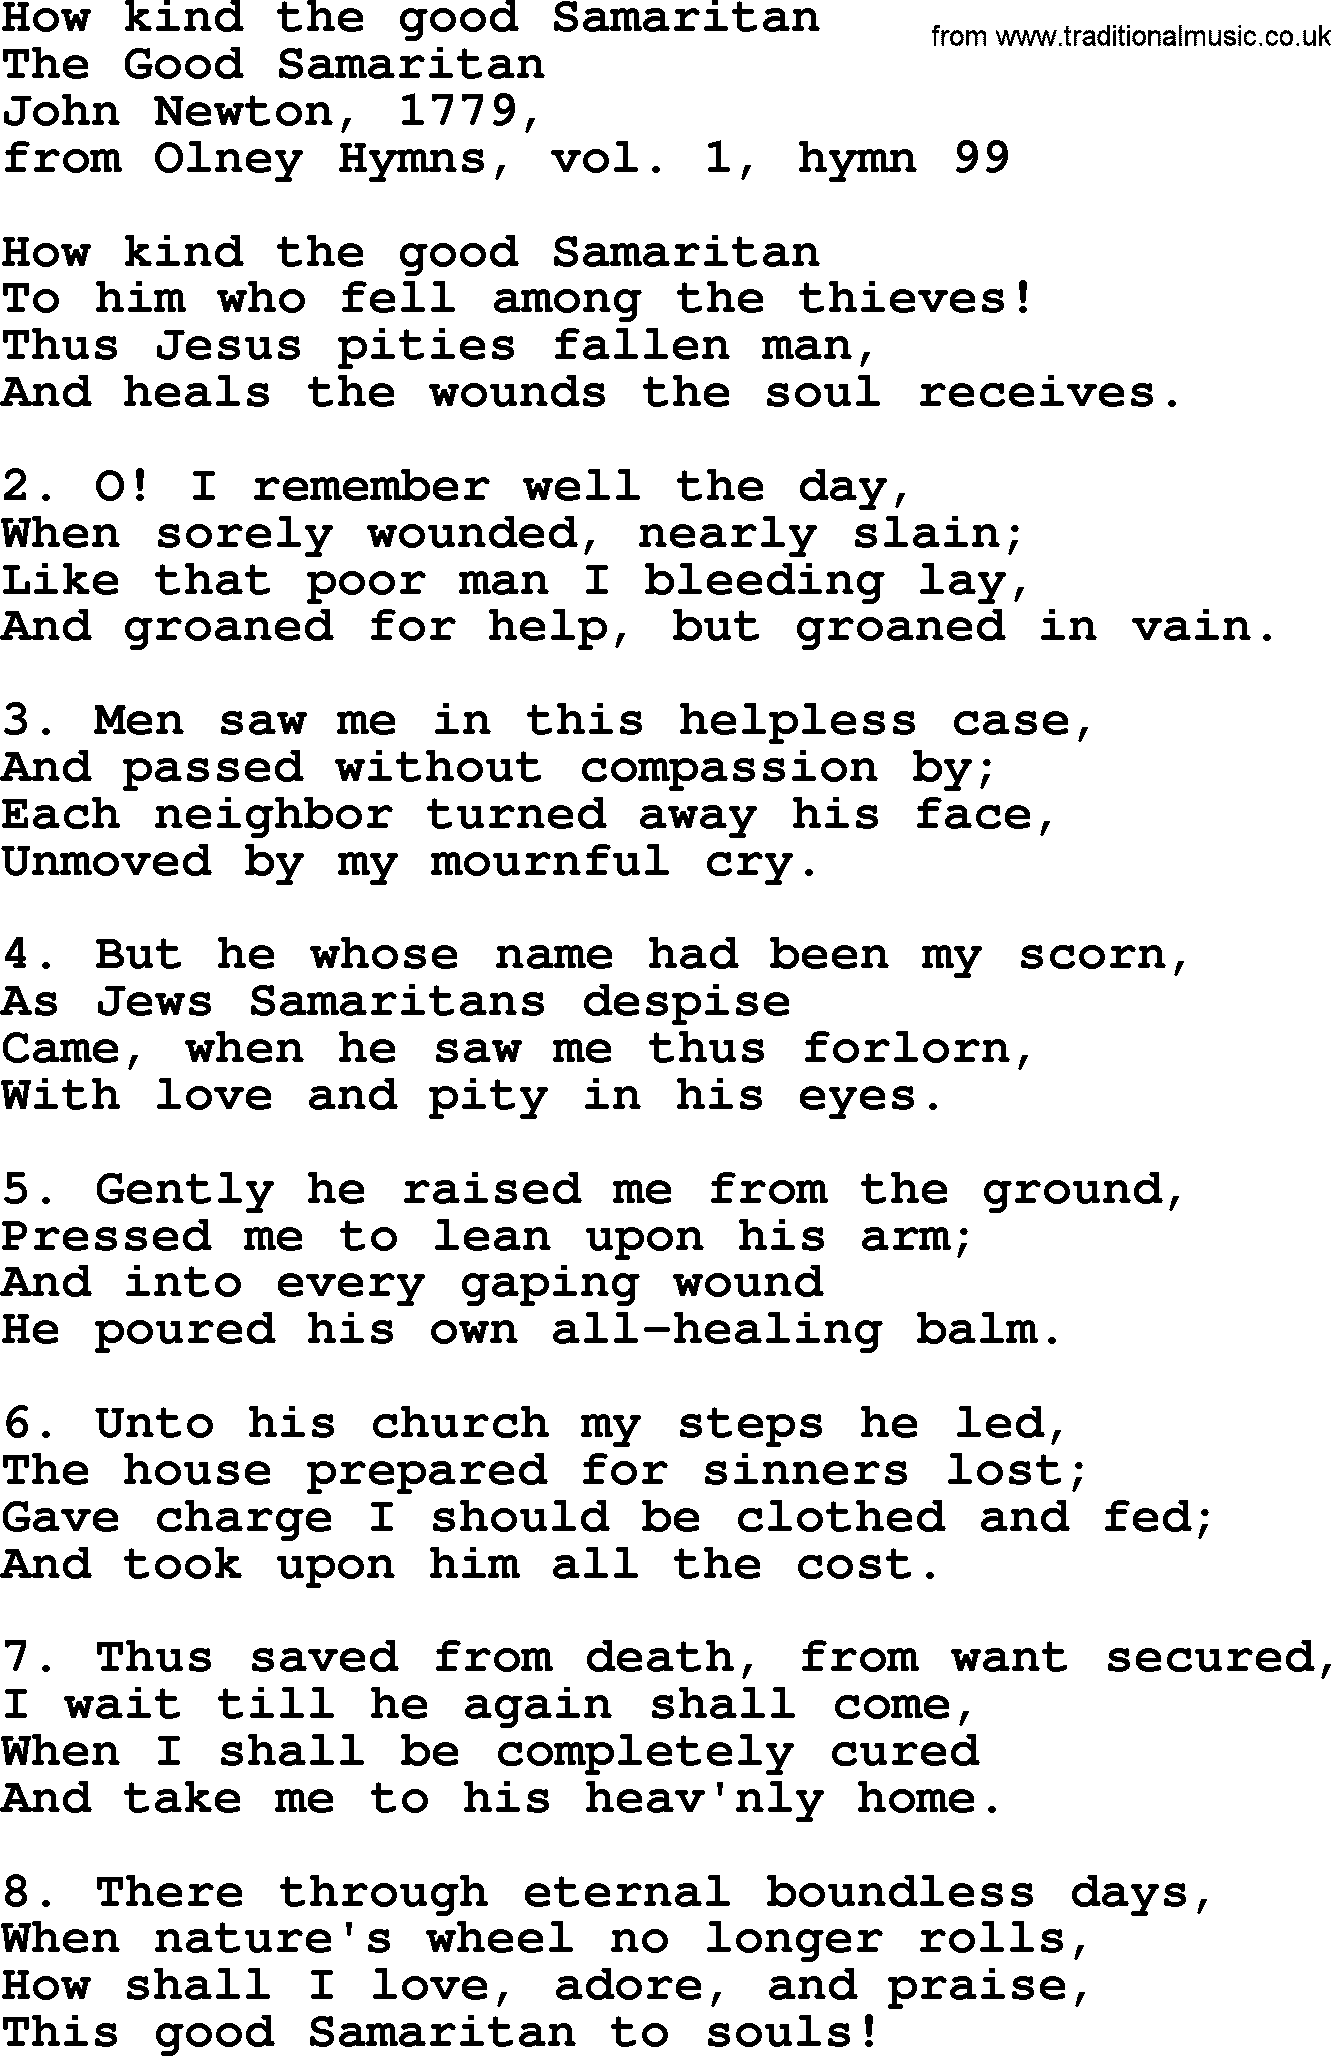 John Newton hymn: How Kind The Good Samaritan, lyrics